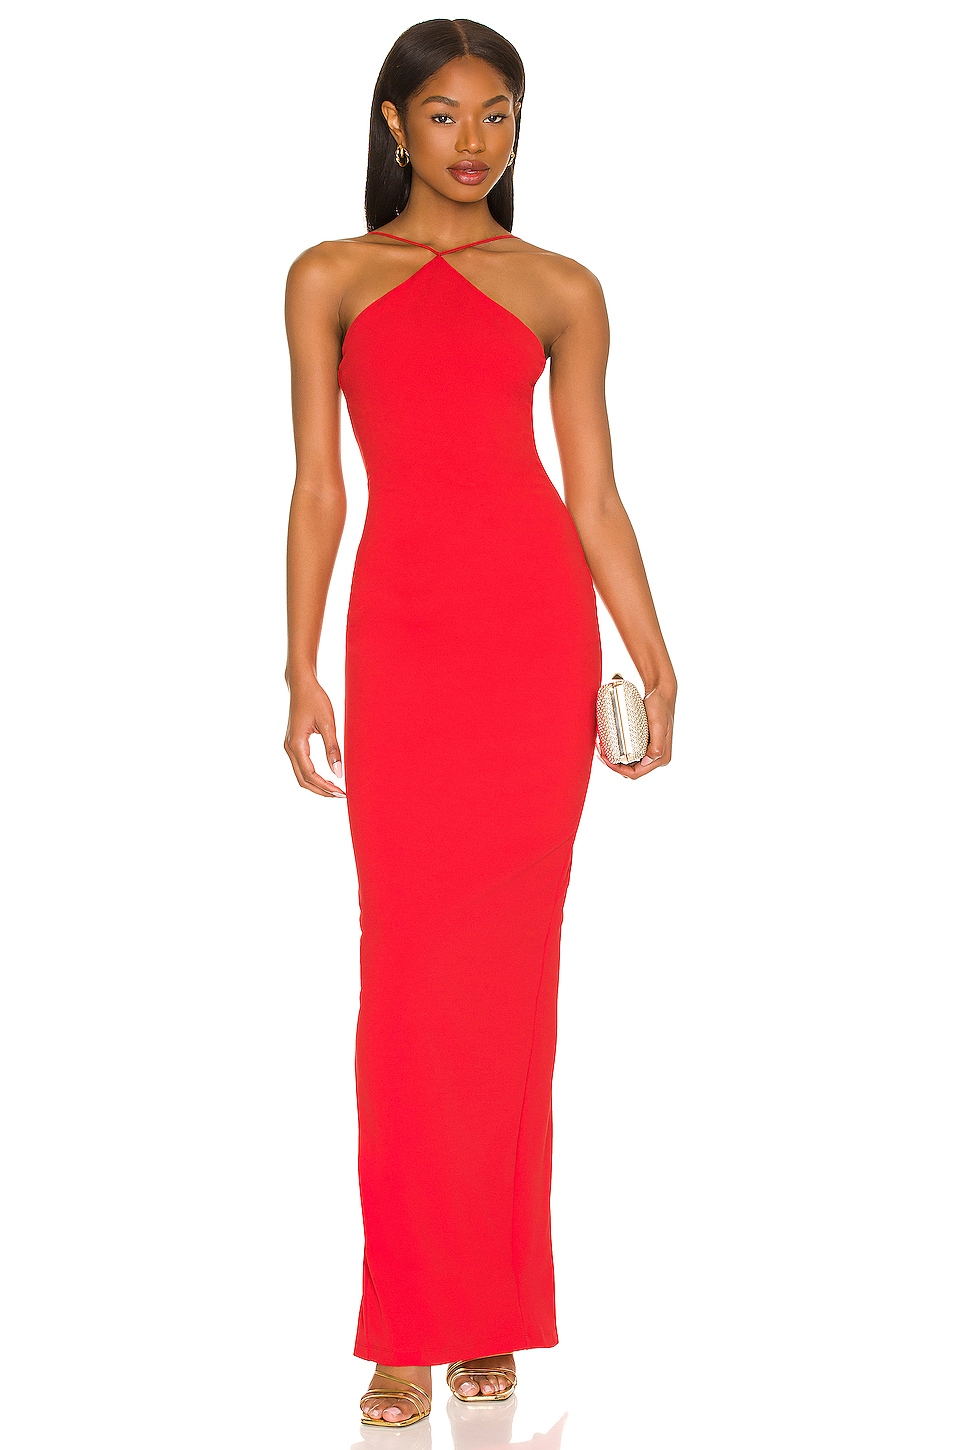 Buy Lady Stark Red Sleeveless Maxi Dress (Small) at Amazon.in